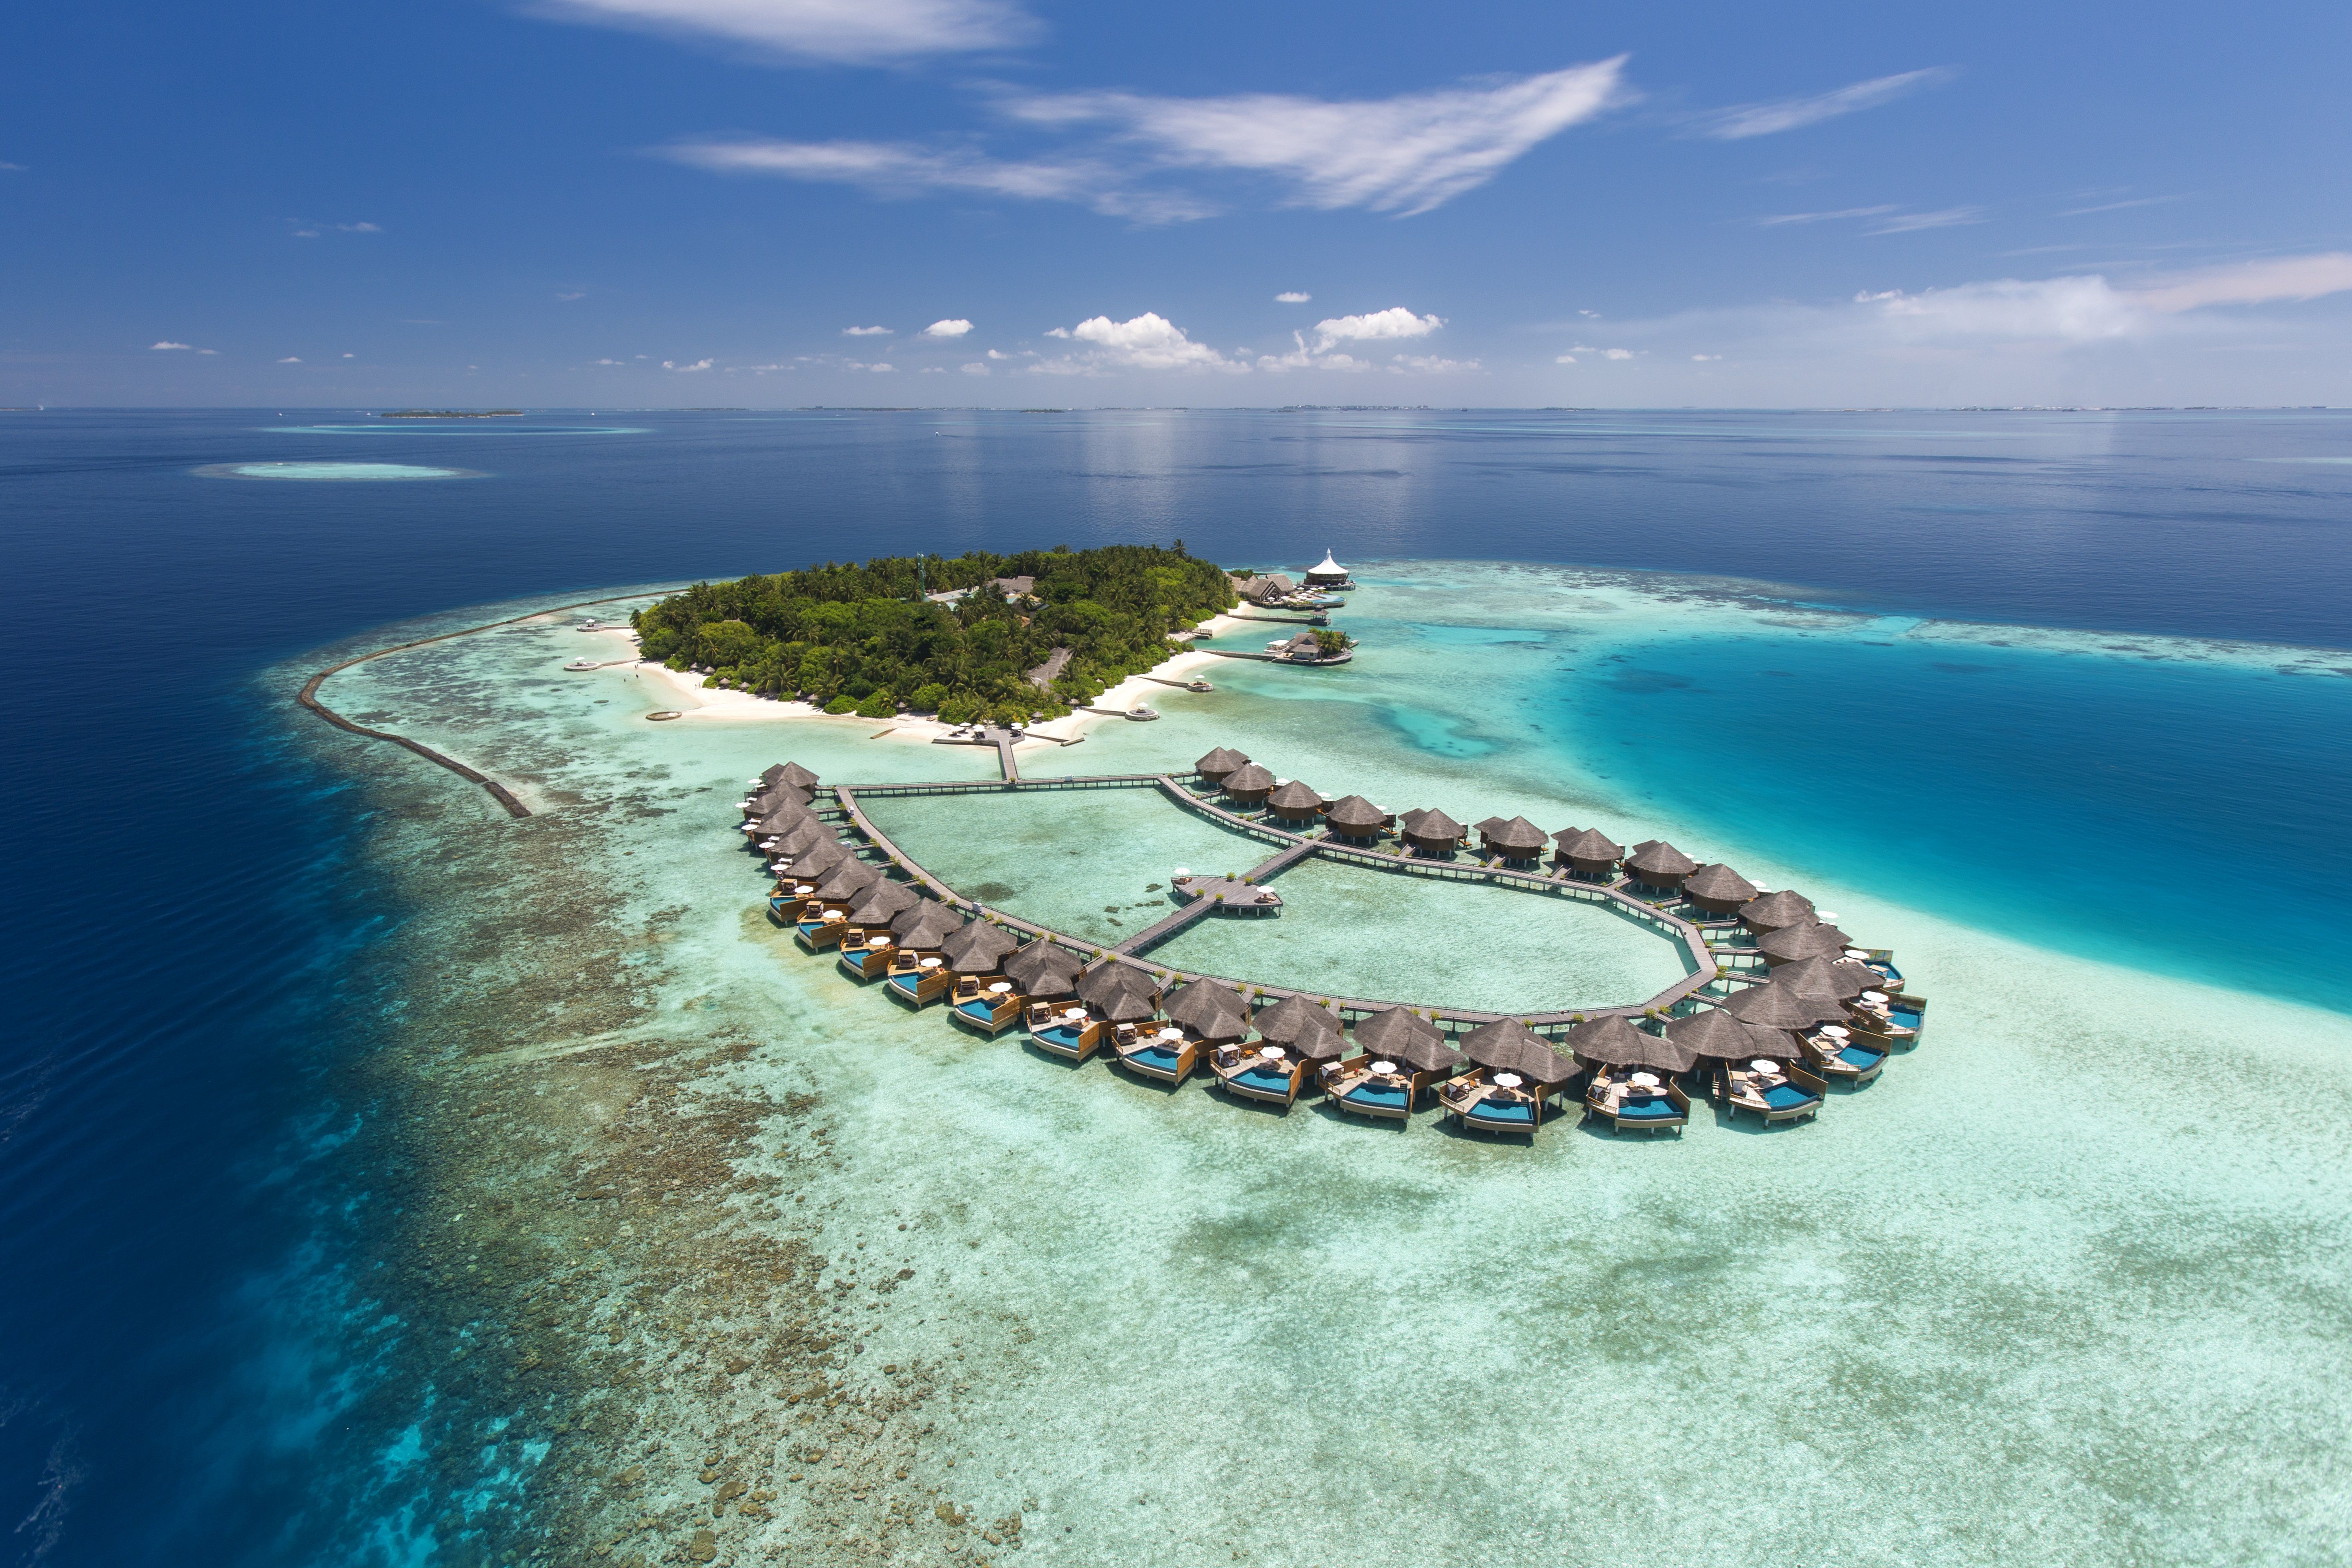 https://hips.hearstapps.com/hmg-prod/images/cbaros-maldives-aerial-view-hr-3-1560881753.jpg